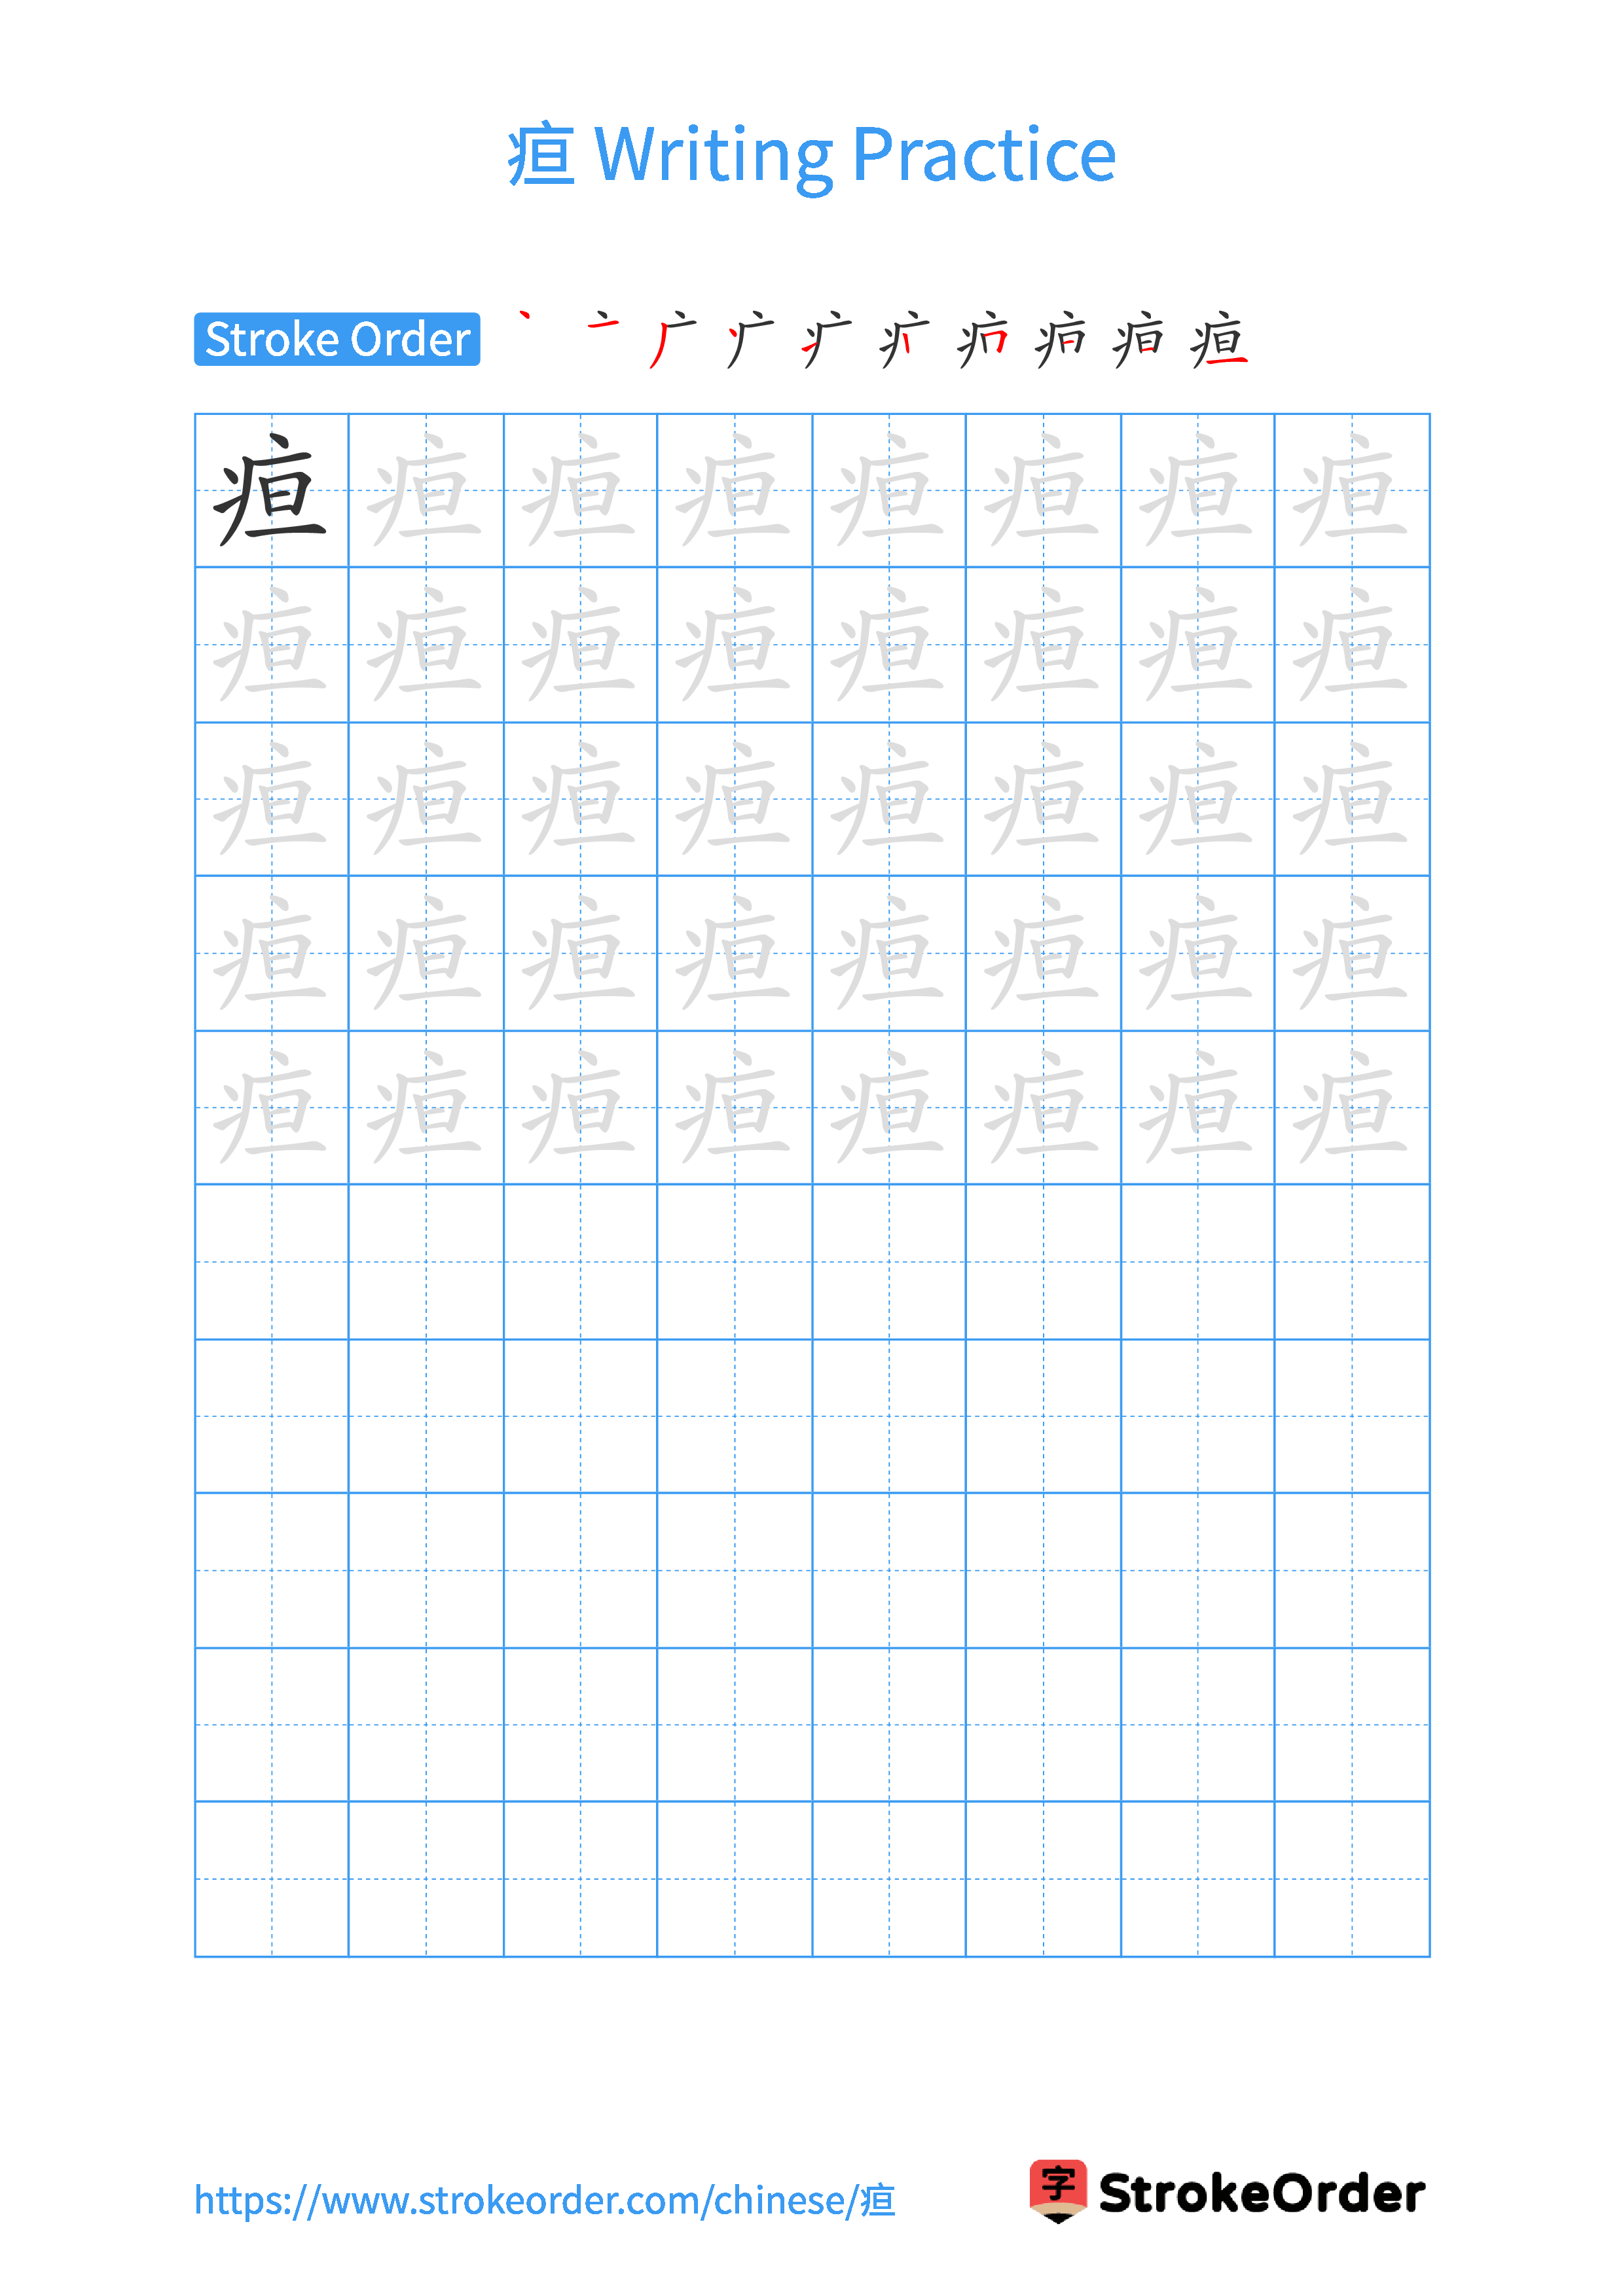 Printable Handwriting Practice Worksheet of the Chinese character 疸 in Portrait Orientation (Tian Zi Ge)